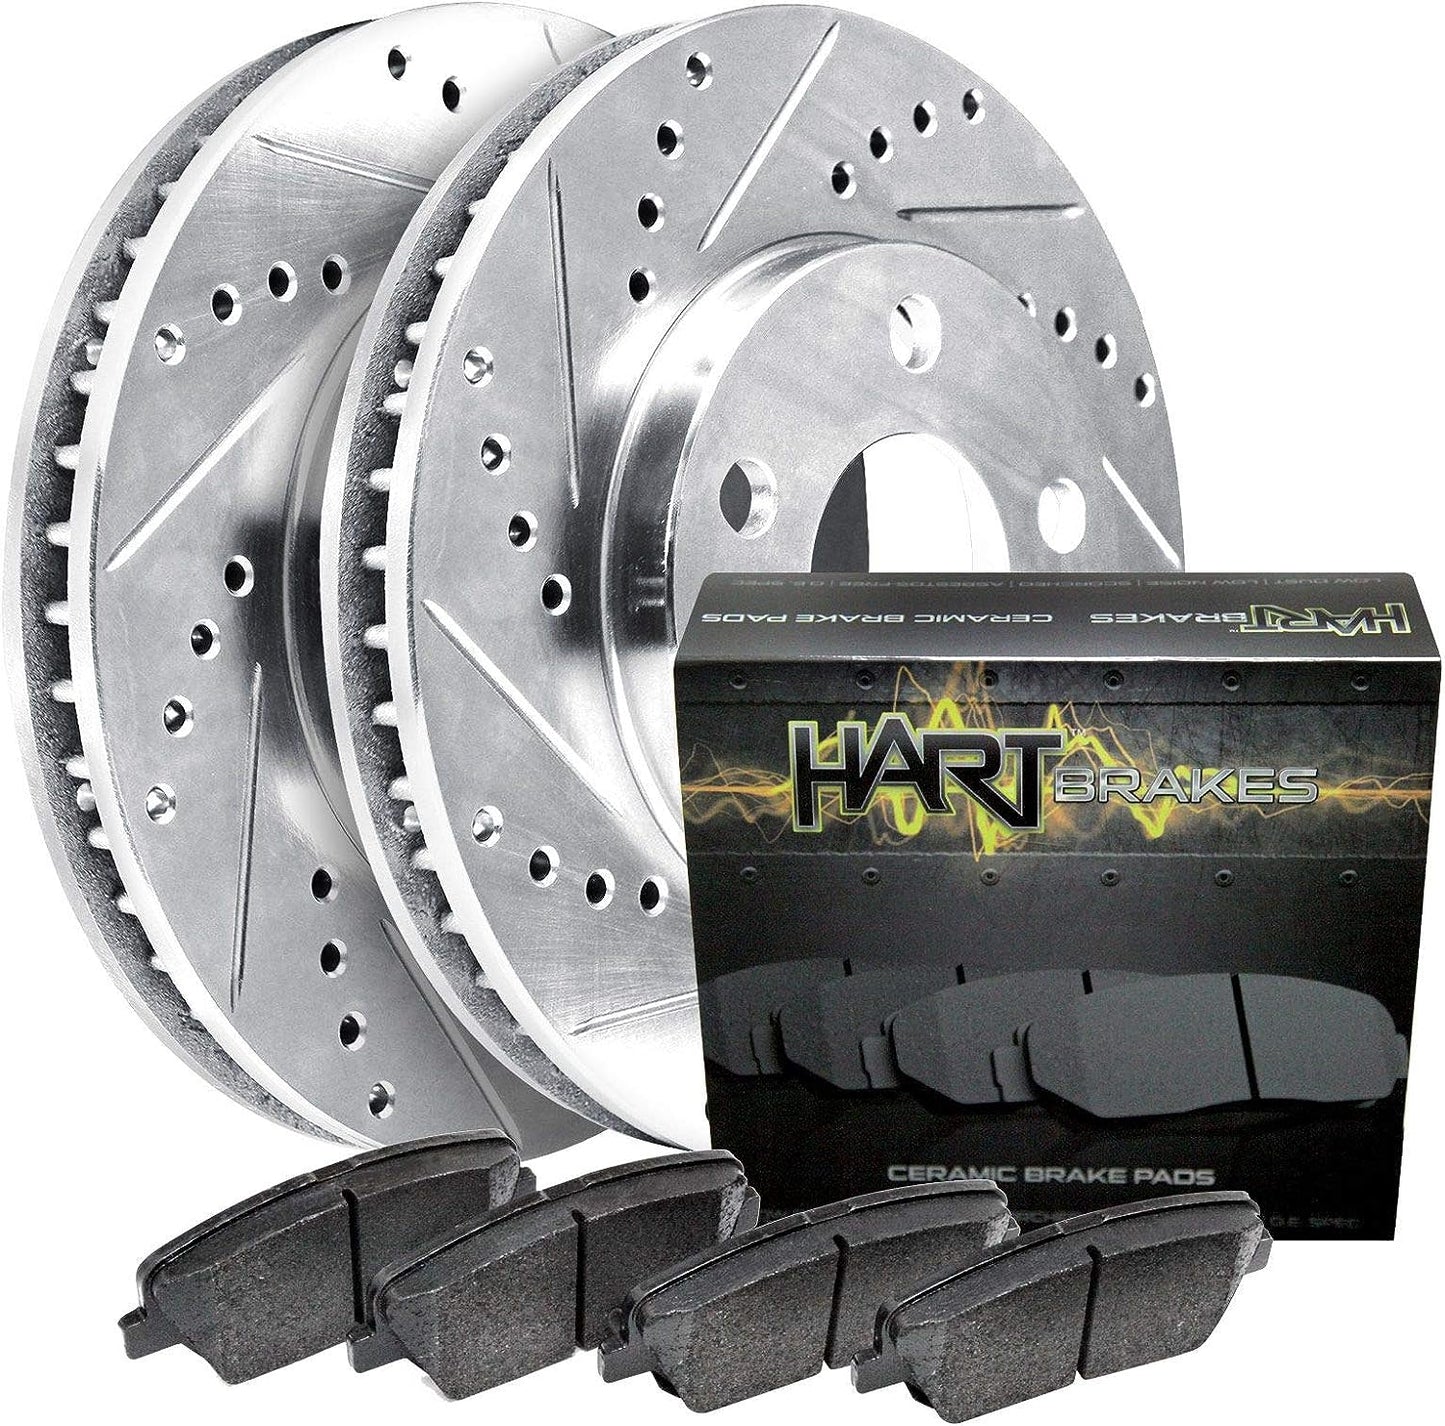 Hart Brakes Front Brakes and Rotors Kit |Front Brake Pads| Brake Rotors and Pads| Ceramic Brake Pads and Rotors |fits 2001-2015 Mercedes-Benz C230, C240, SLK200